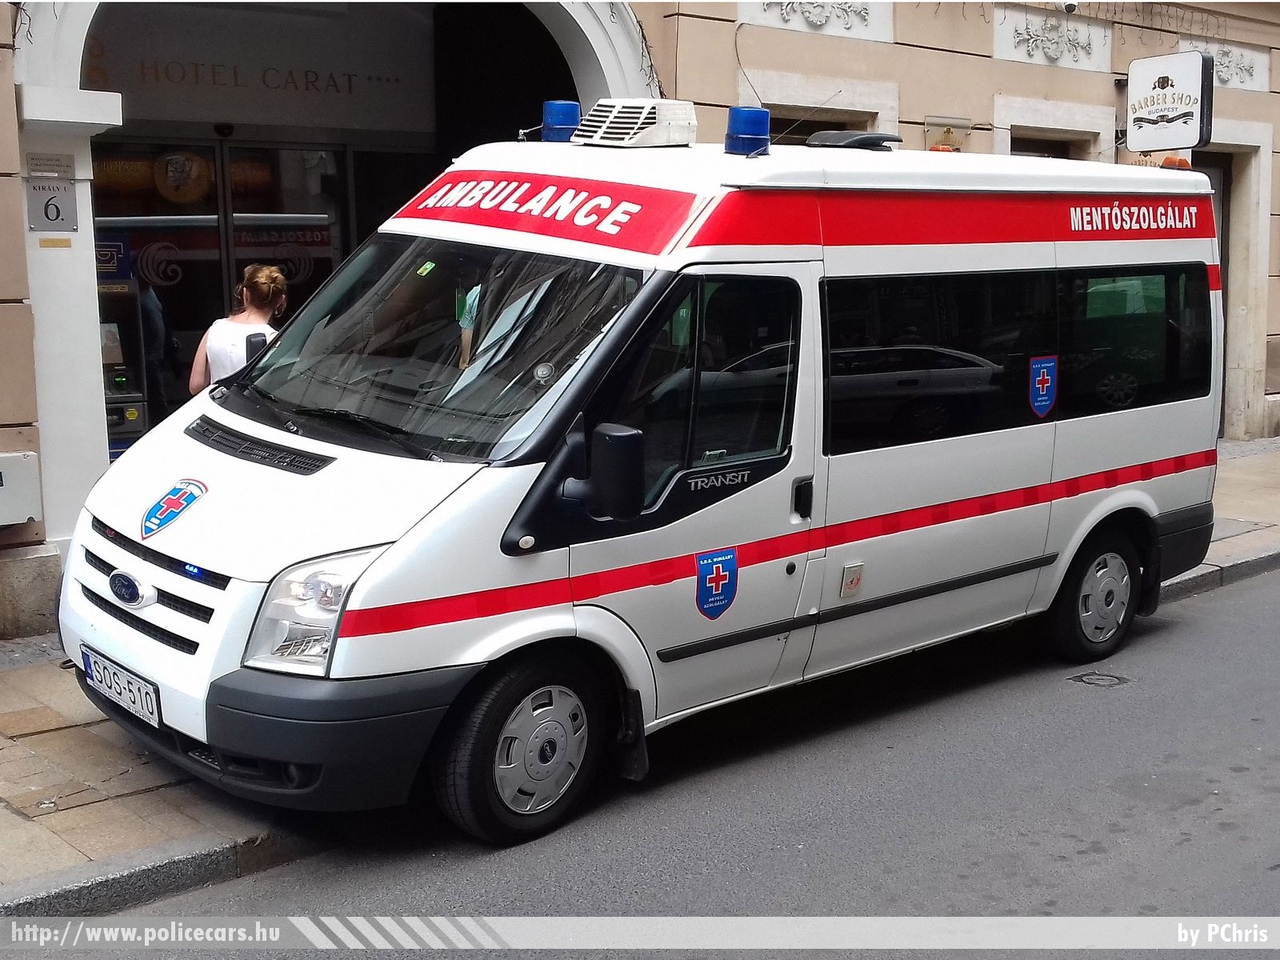 Ford Transit, SOS Assistance Hungary Kft., fotó: PChris
Keywords: mentő mentőautó magyar Magyarország hungarian Hungary ambulance SOS-510